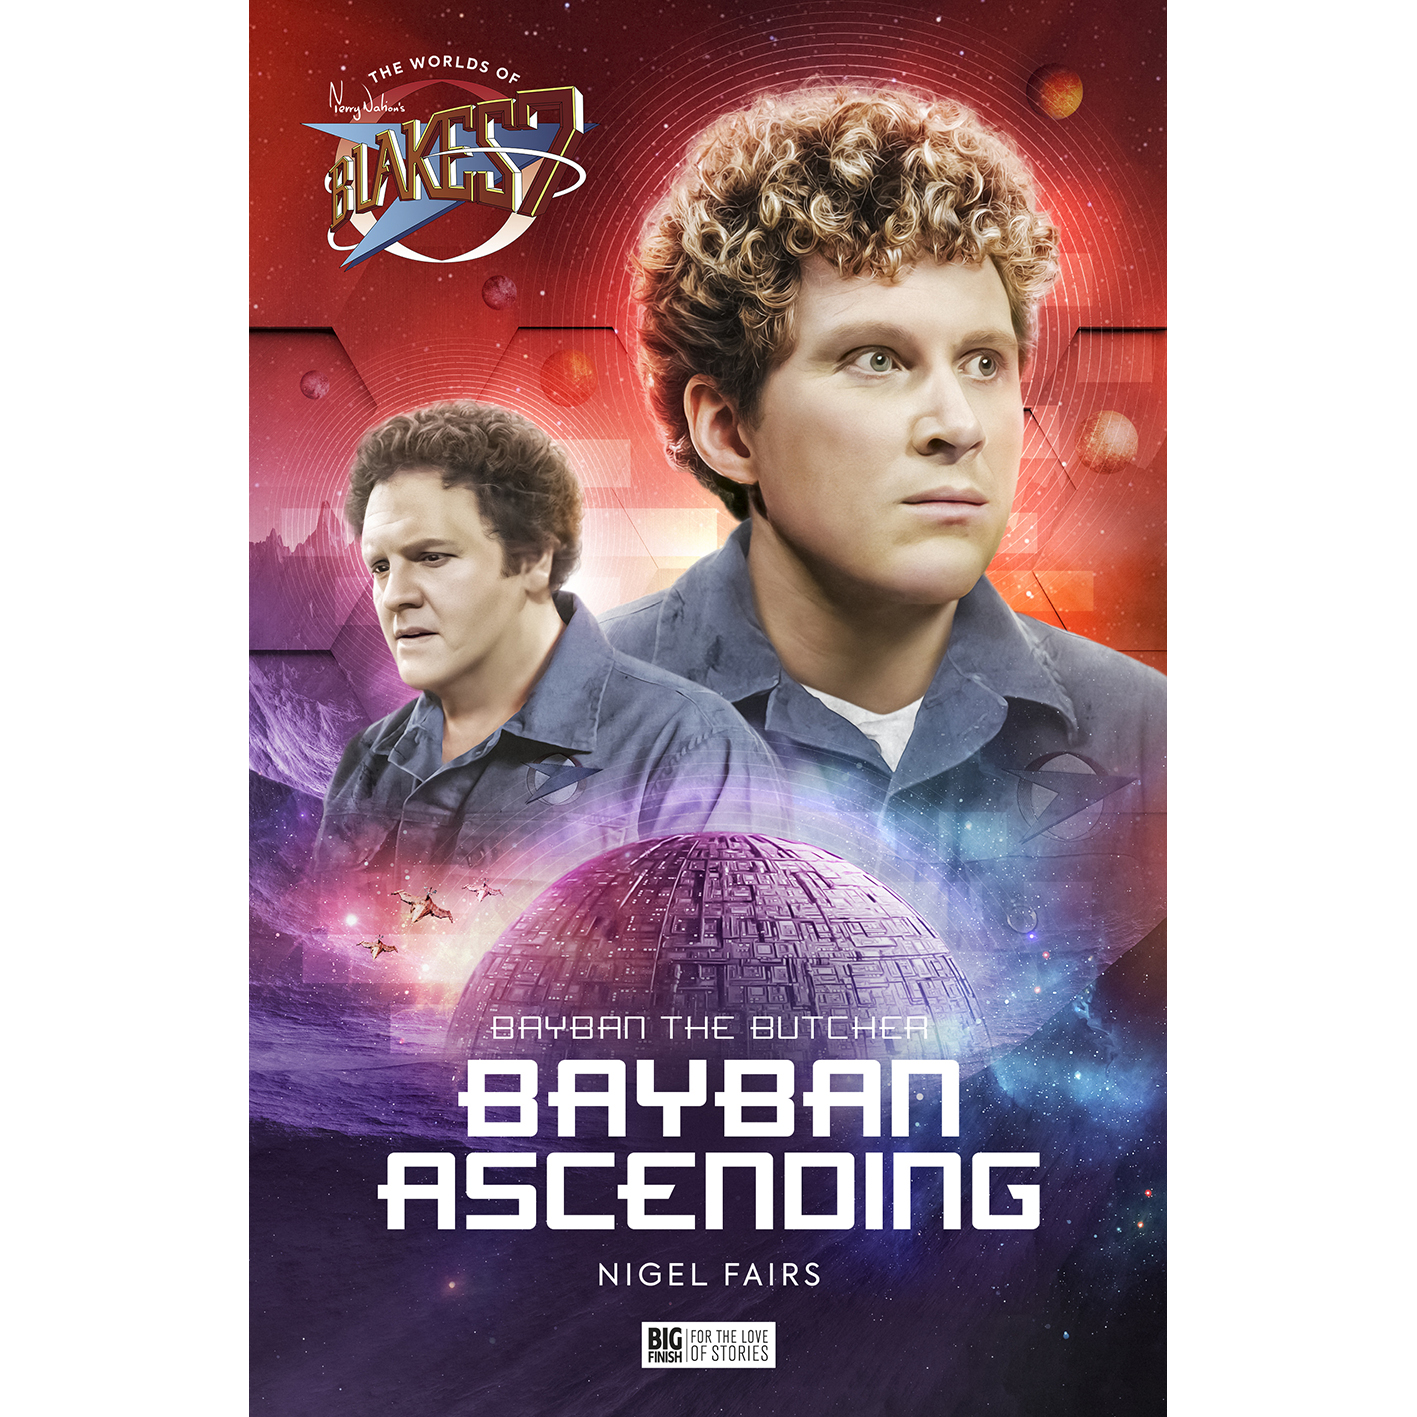  Bayban Ascending - The Worlds of Blake's 7